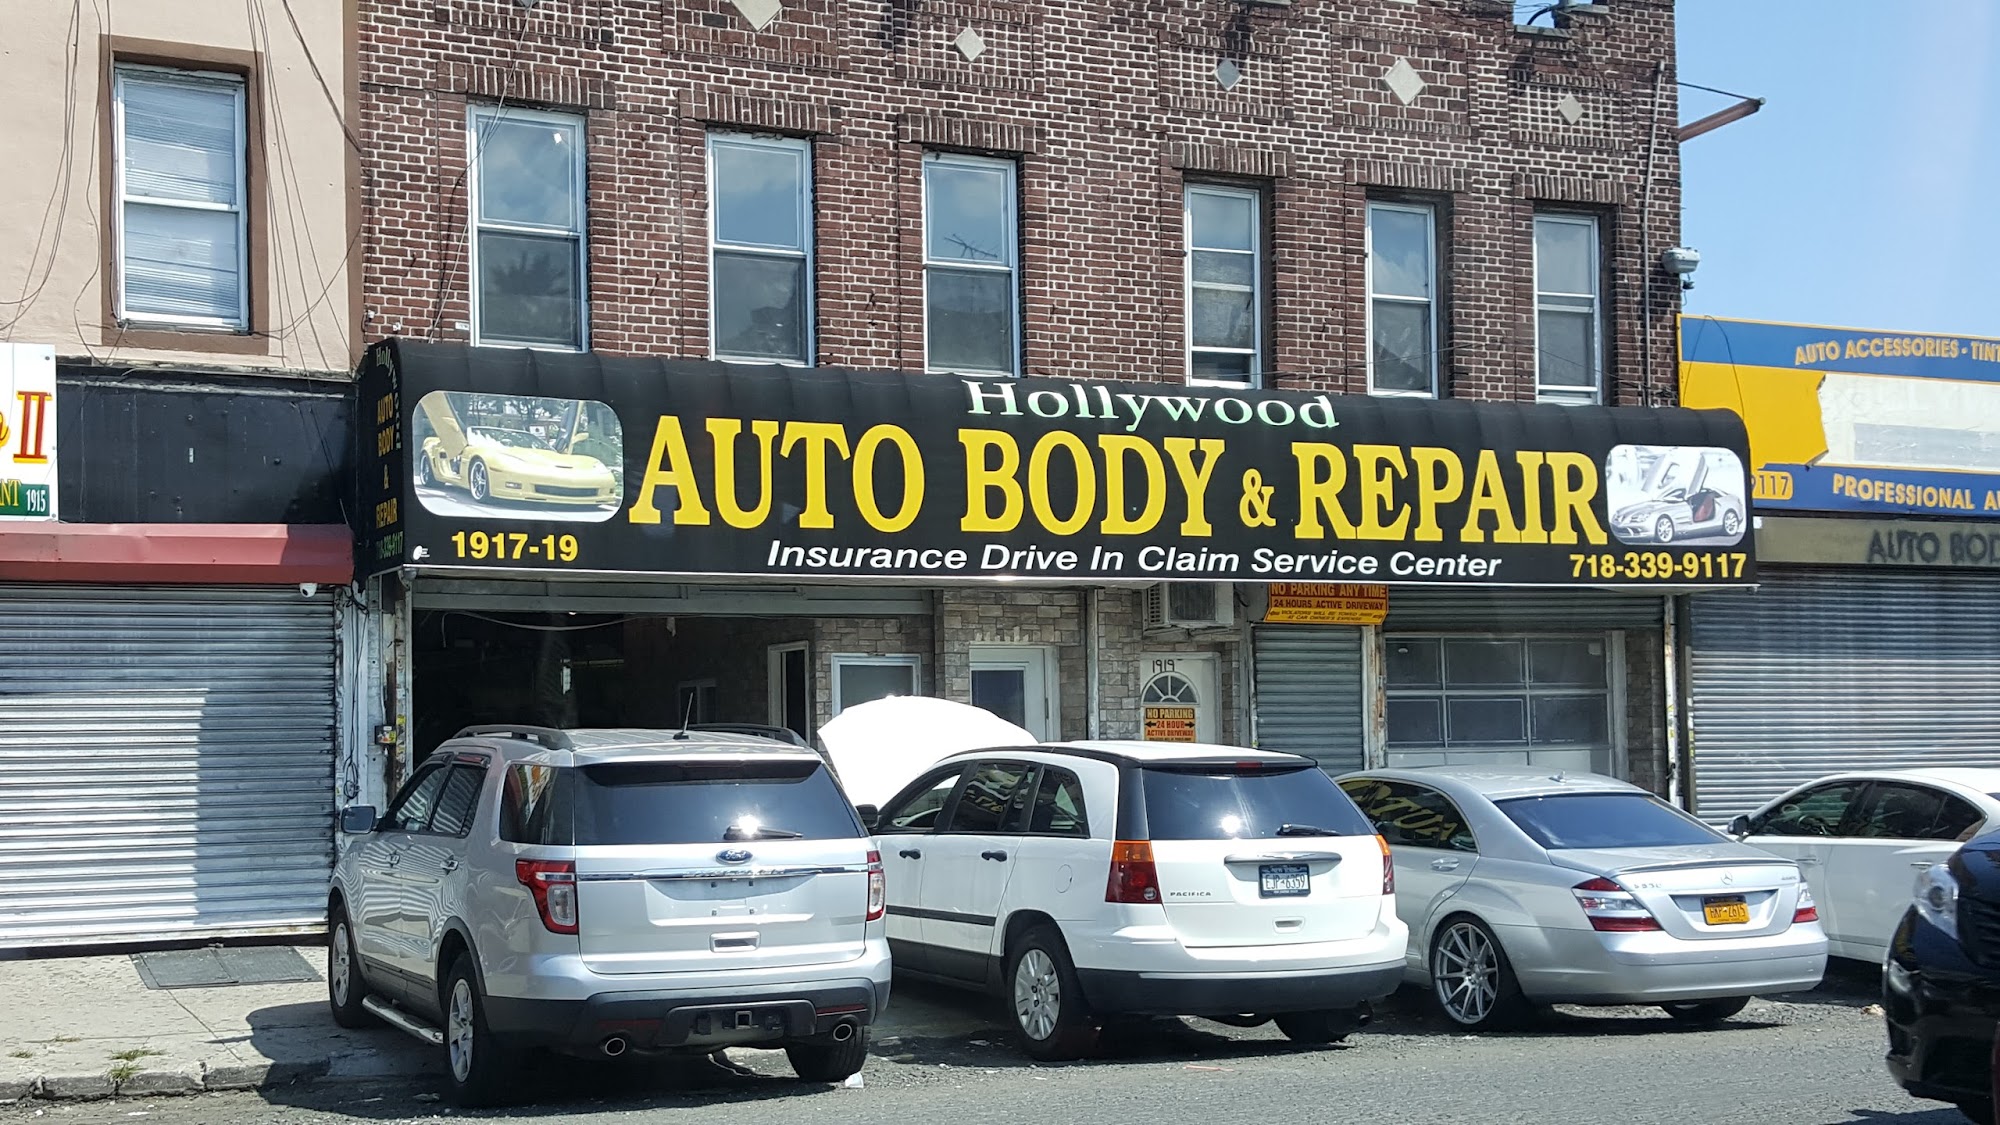 Hollywood Auto Body & Repair